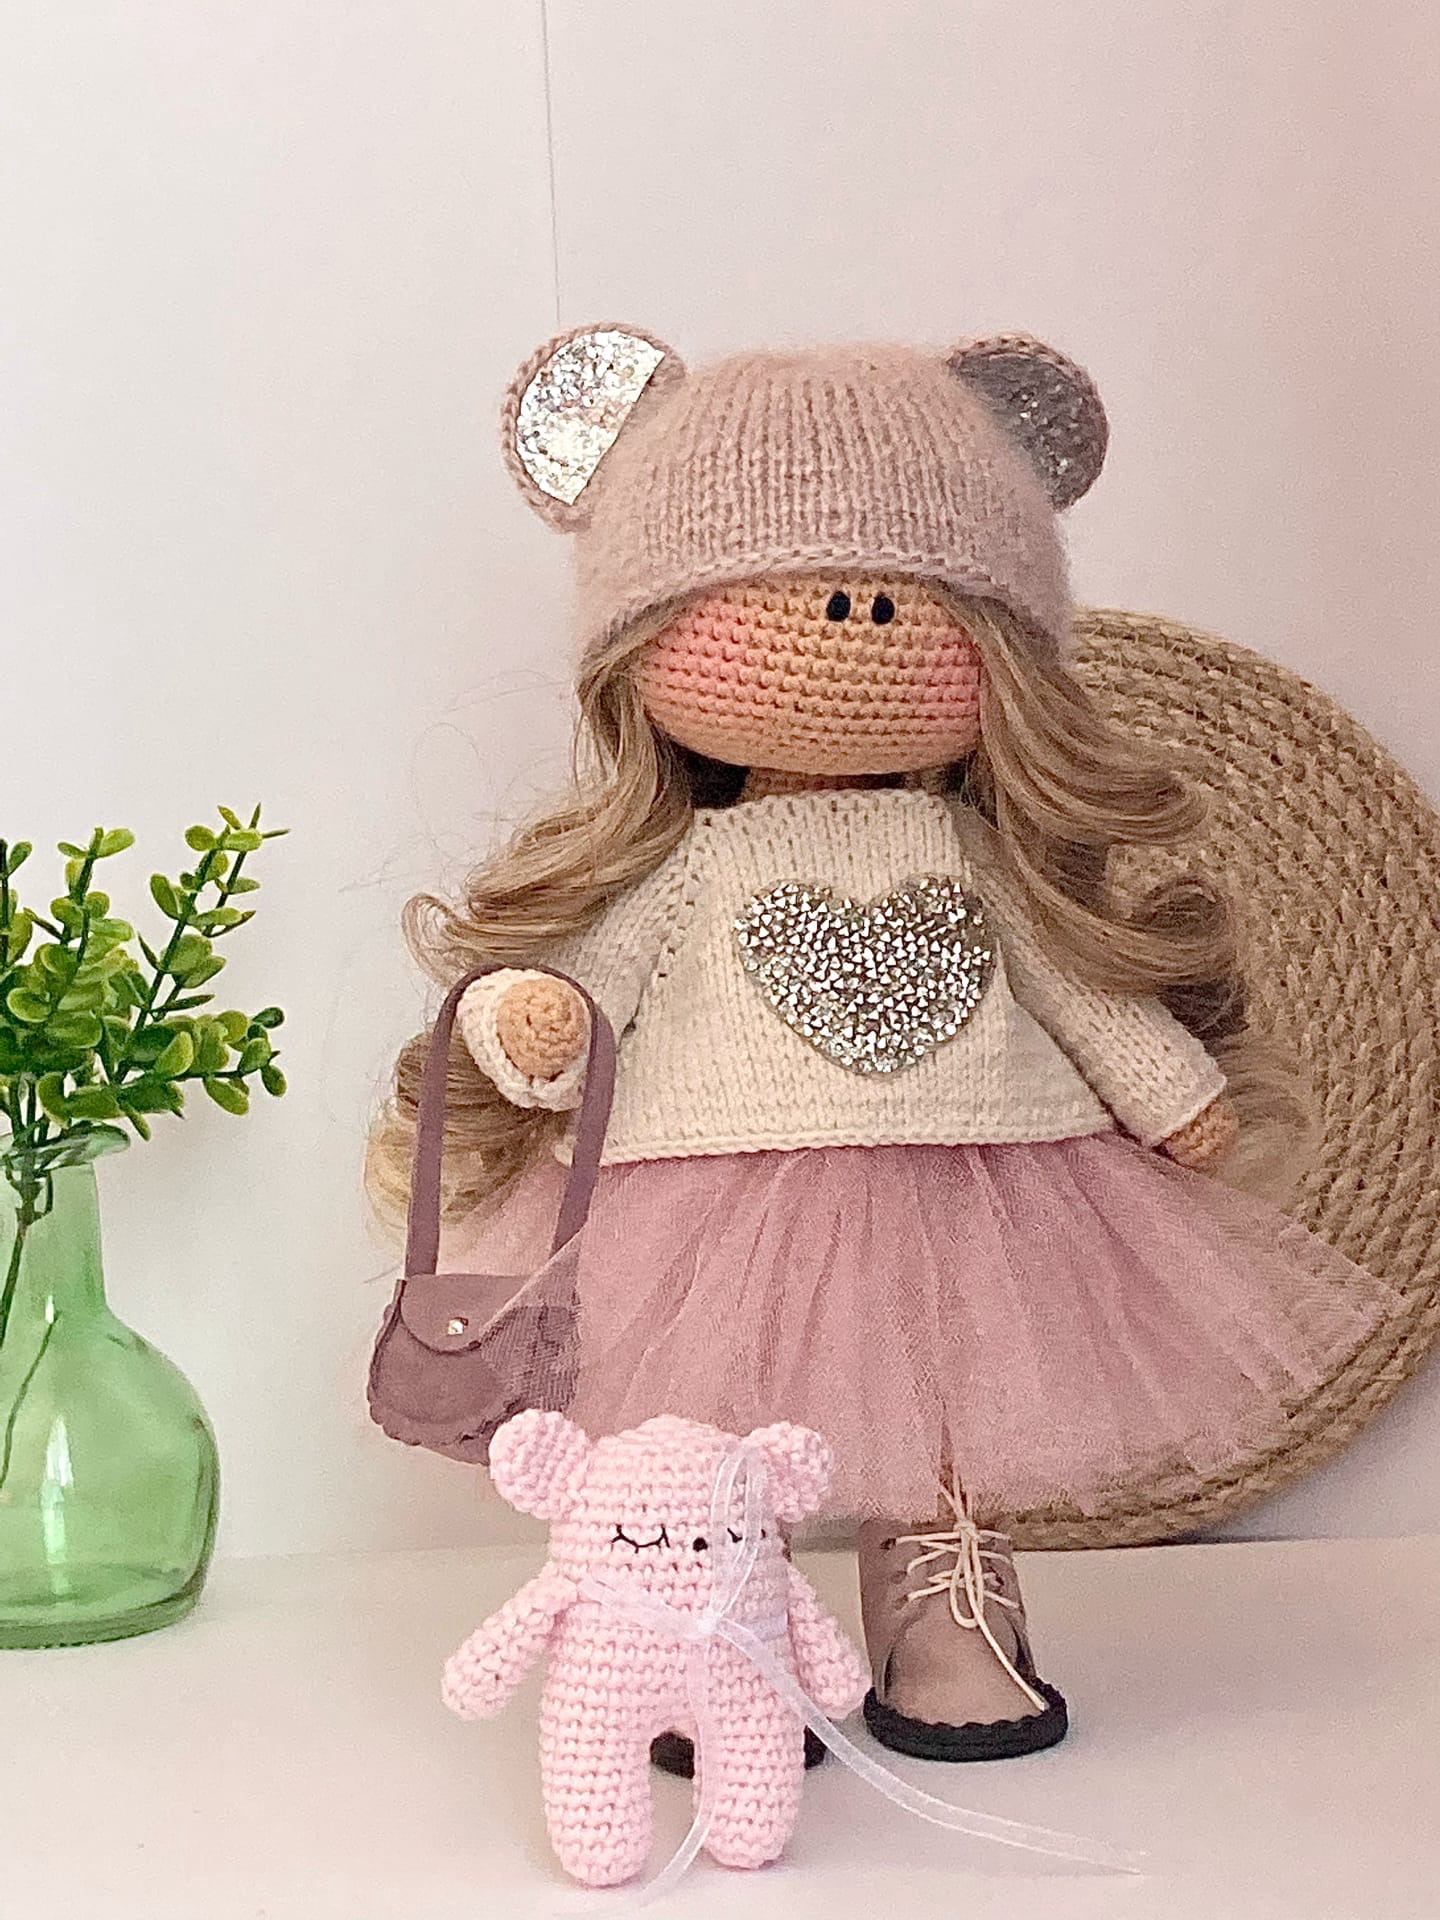 Tilda Ash Blonde Doll Hair & Crochet Merino Wool Yarn, Tilda #TIL140053